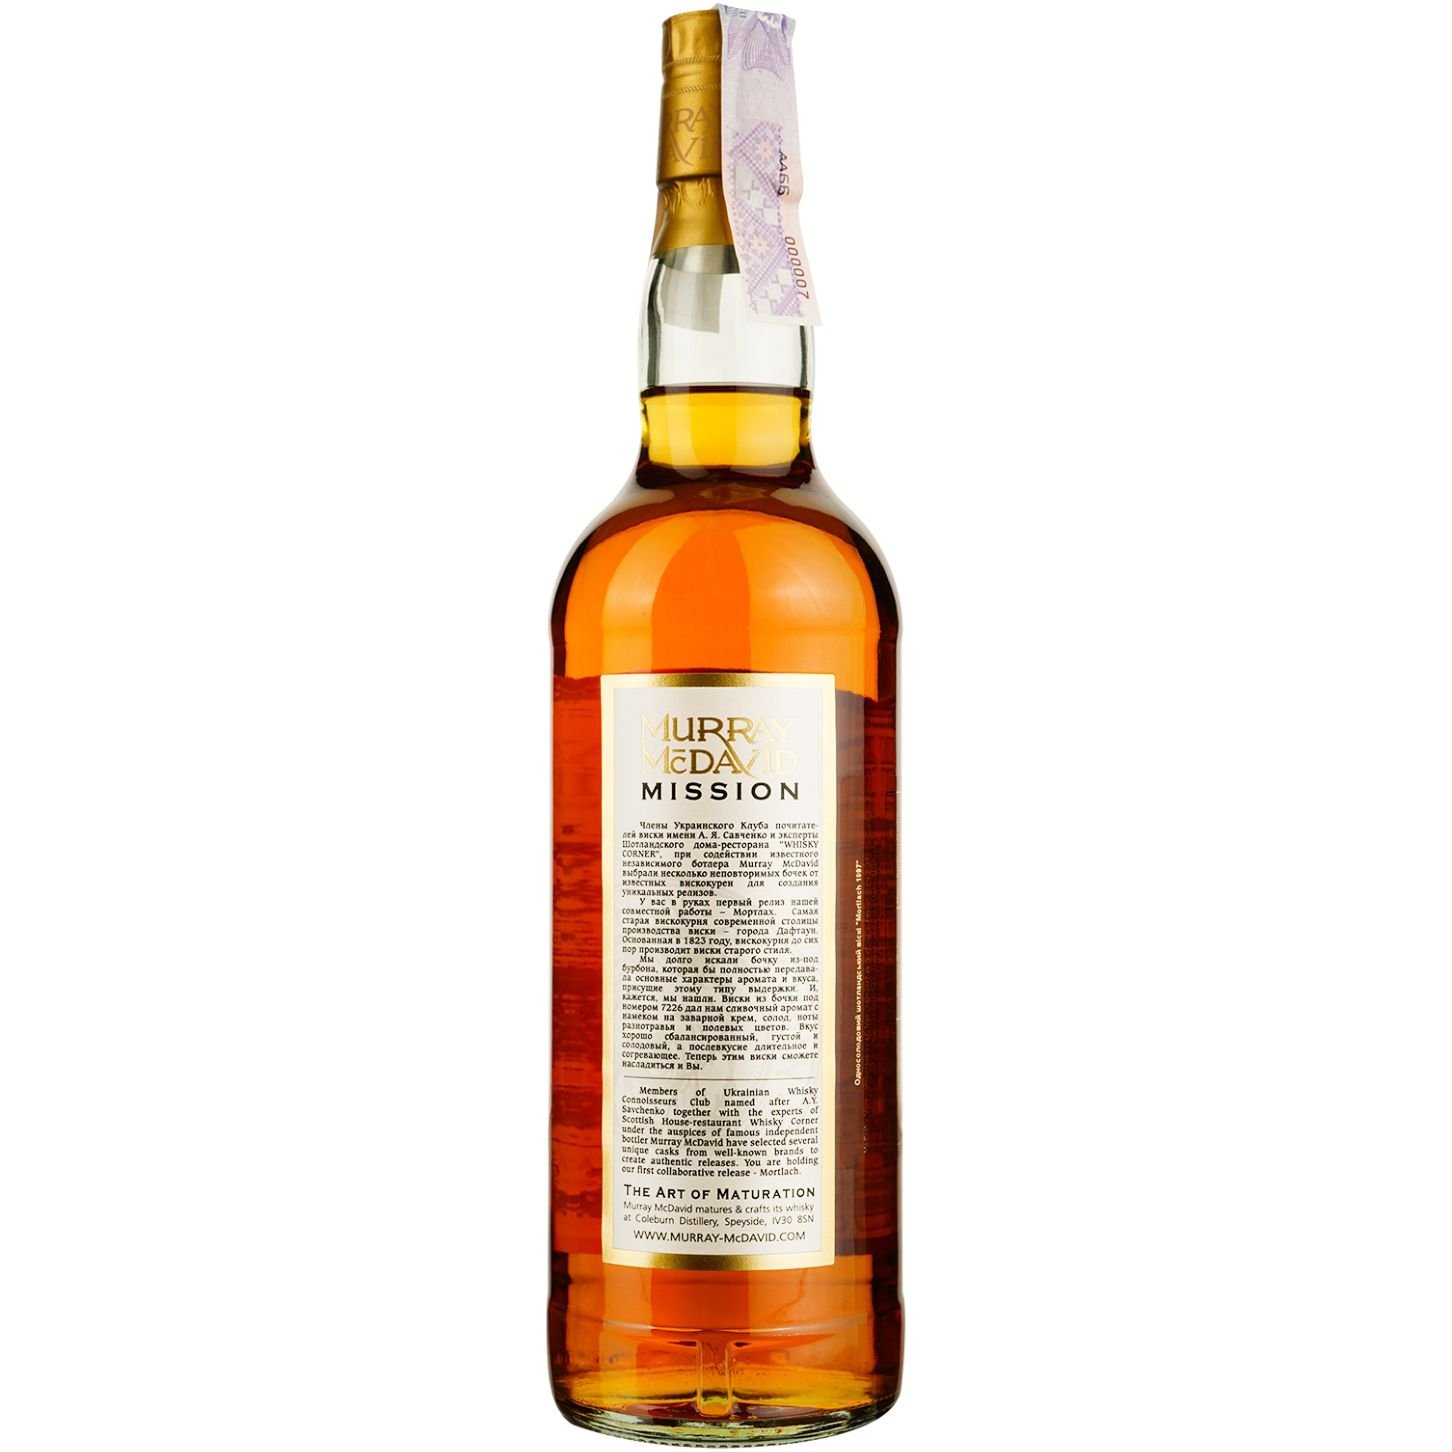 Виски Mortlach Murray McDavid 19 Years Old Single Malt Scotch Whisky, в подарочной упаковке, 55,1%, 0,7 л - фото 4